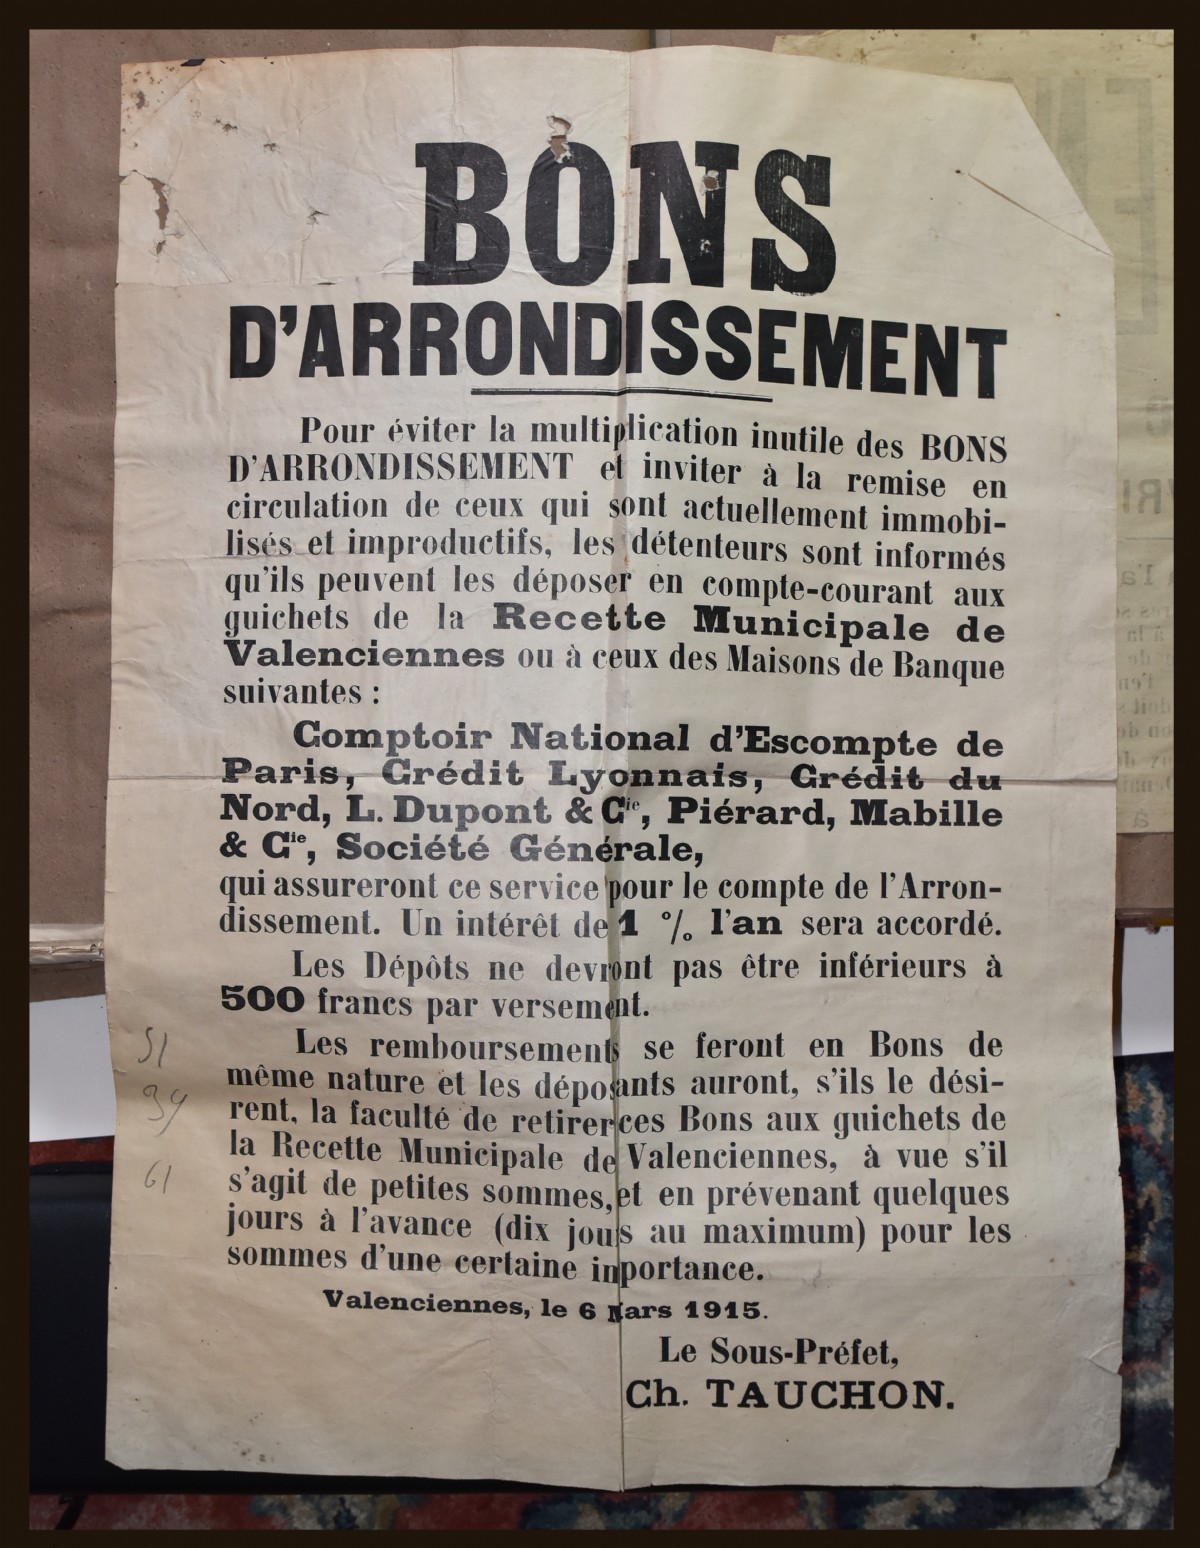 Valenciennes occupation poster concerning bons d'arrondissement - food/access coupons 